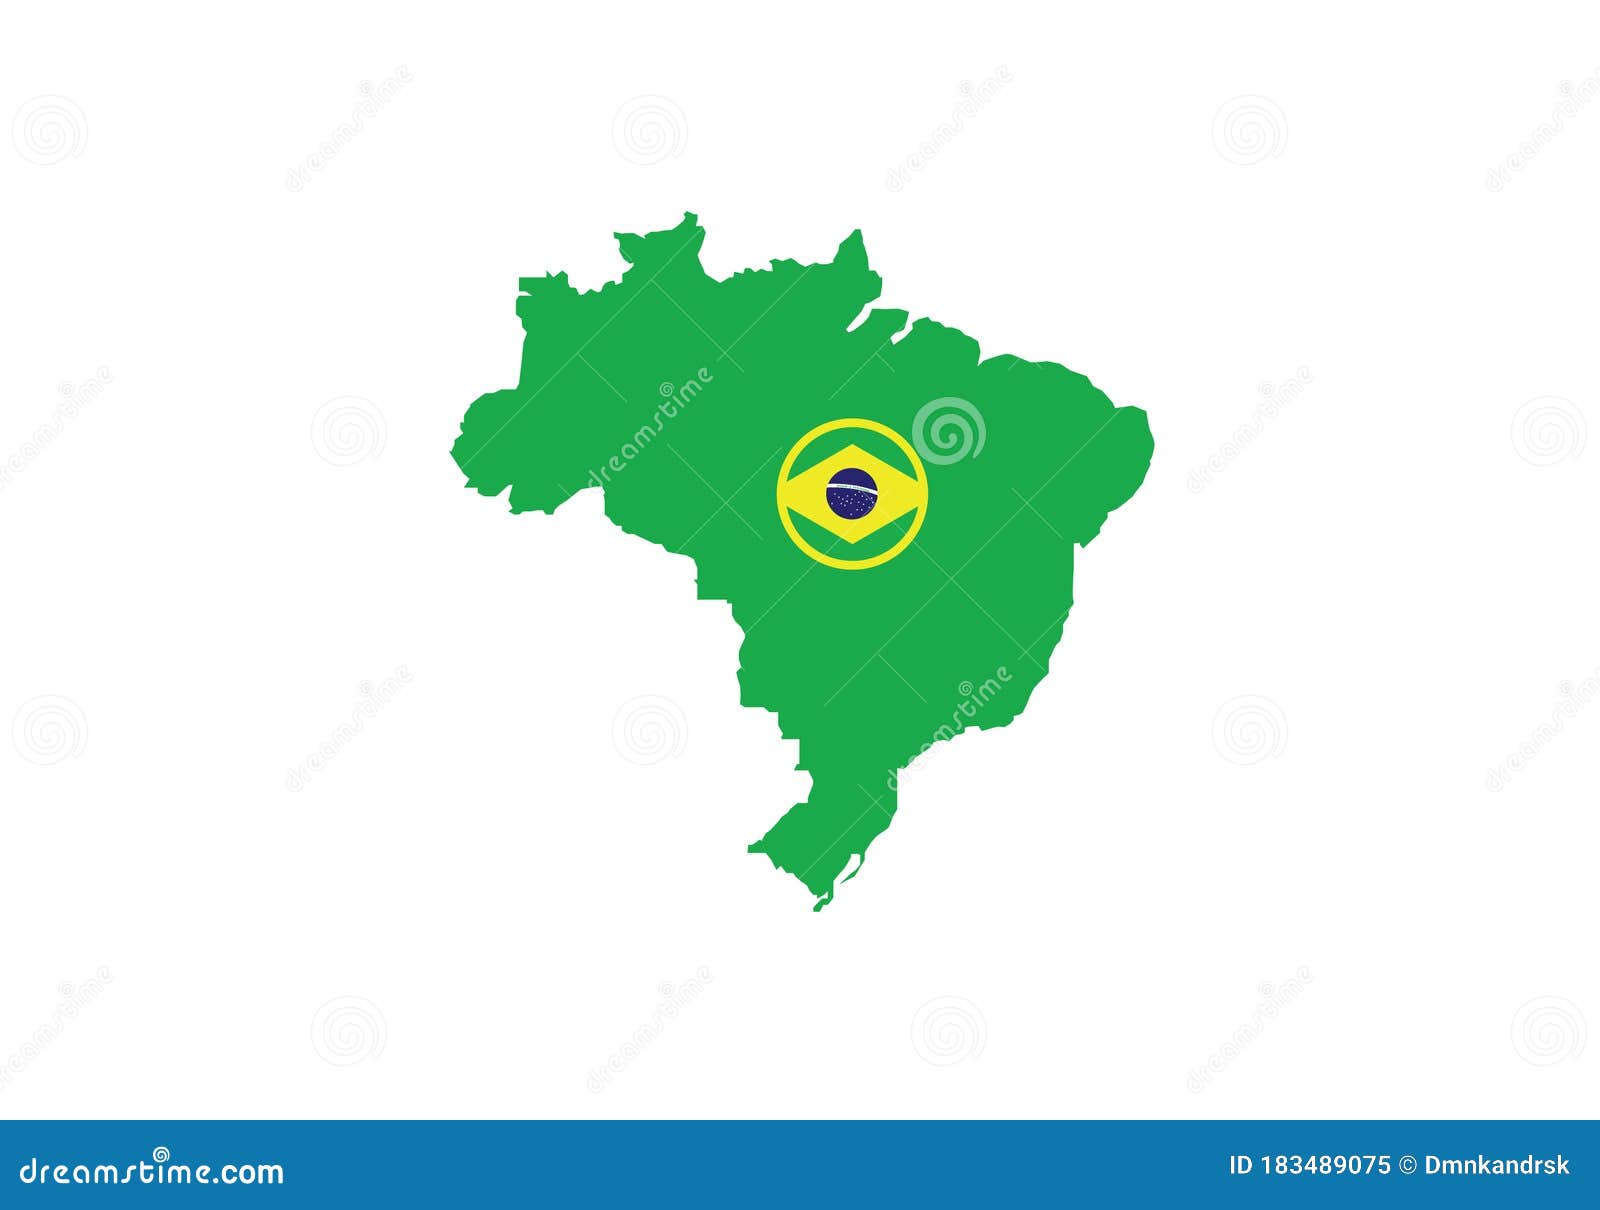 Brazil Outline Map Country Shape State Borders Stock Vector - Illustration  of element, frame: 183489075